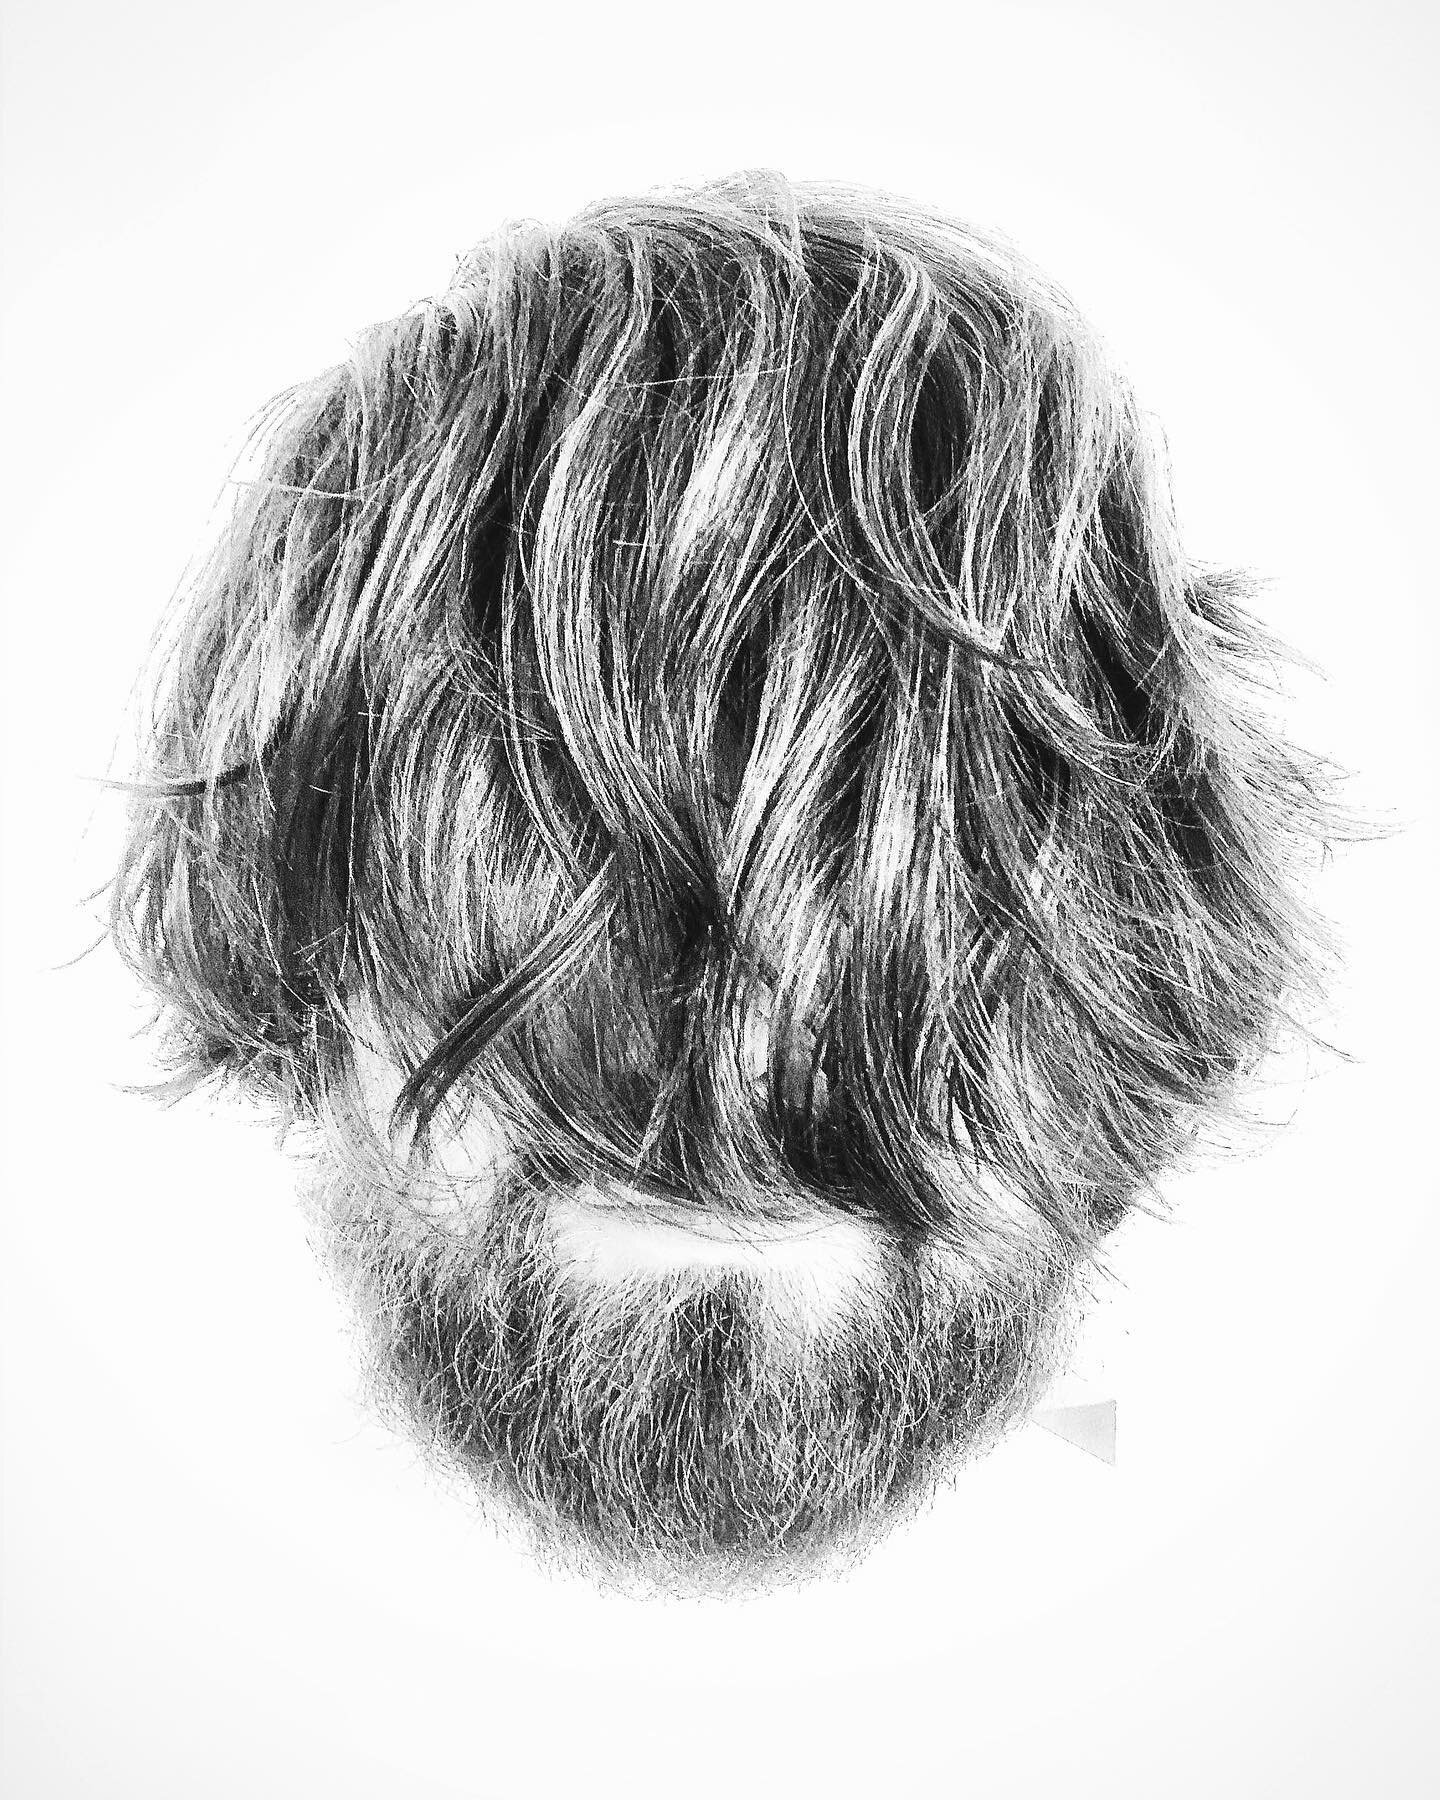 IT. #haircuttime #lockdownhair #blackandwhite #headabovetherest #headless #furry #beardoff #locksofgold